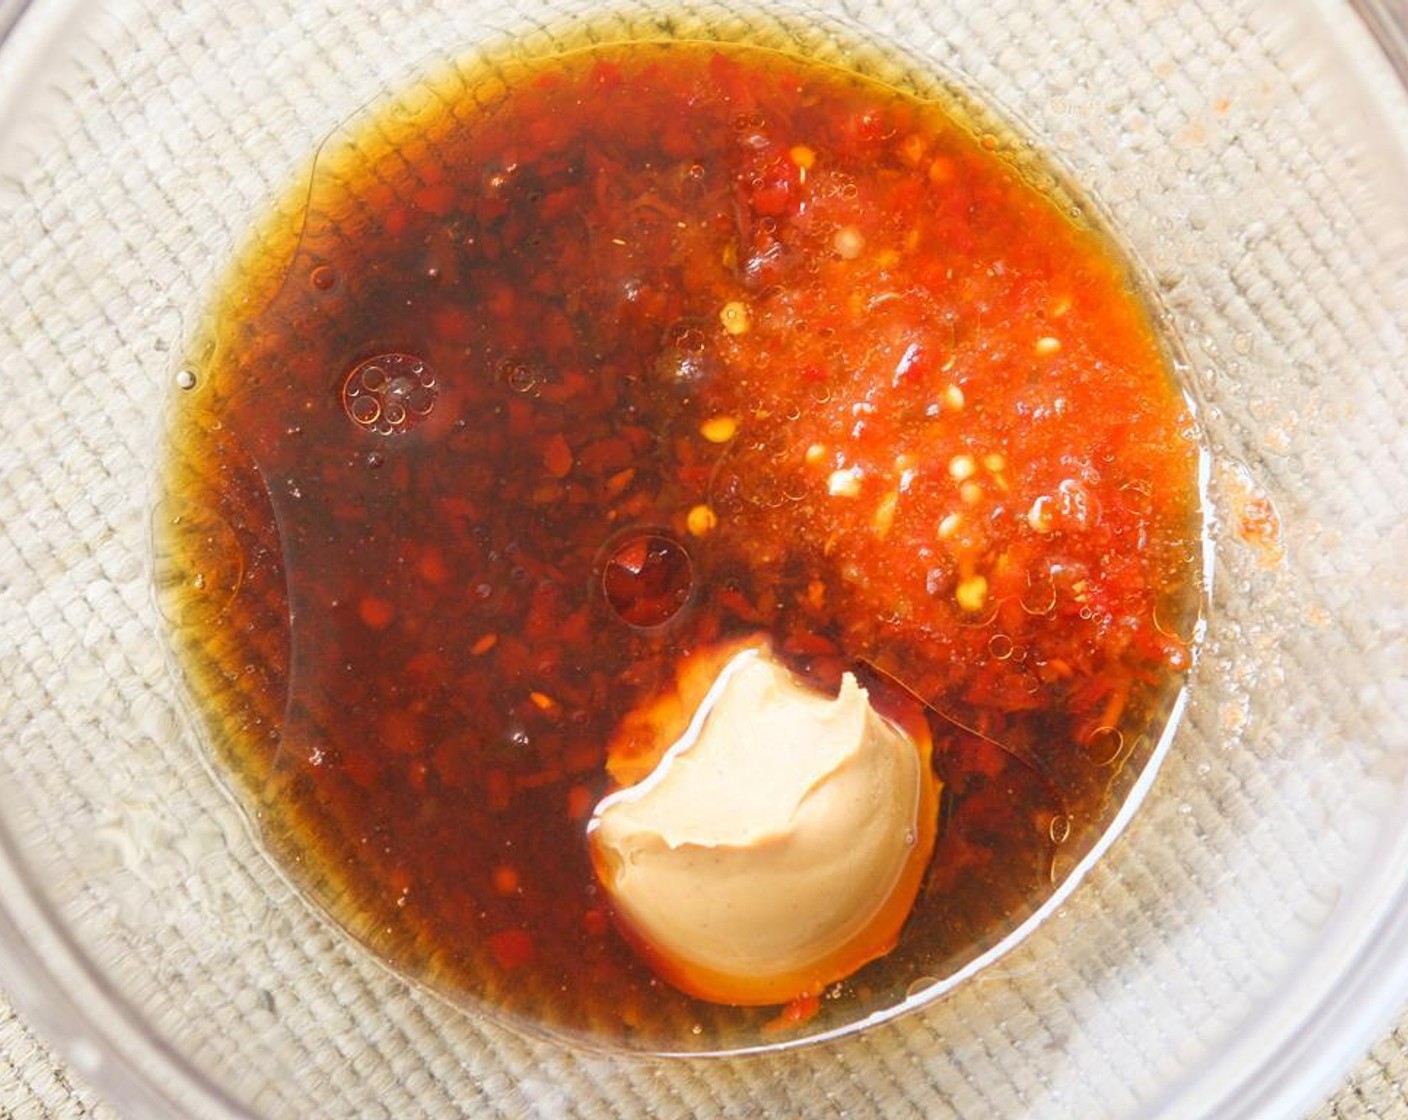 step 4 Meanwhile, in a microwaveable bowl, combine the Soy Sauce (2 Tbsp), Rice Vinegar (1 Tbsp), Sesame Oil (1 Tbsp), Peanut Butter (1 Tbsp), Water (1 Tbsp), Honey (1 Tbsp) and Chili Garlic Sauce (2 Tbsp).